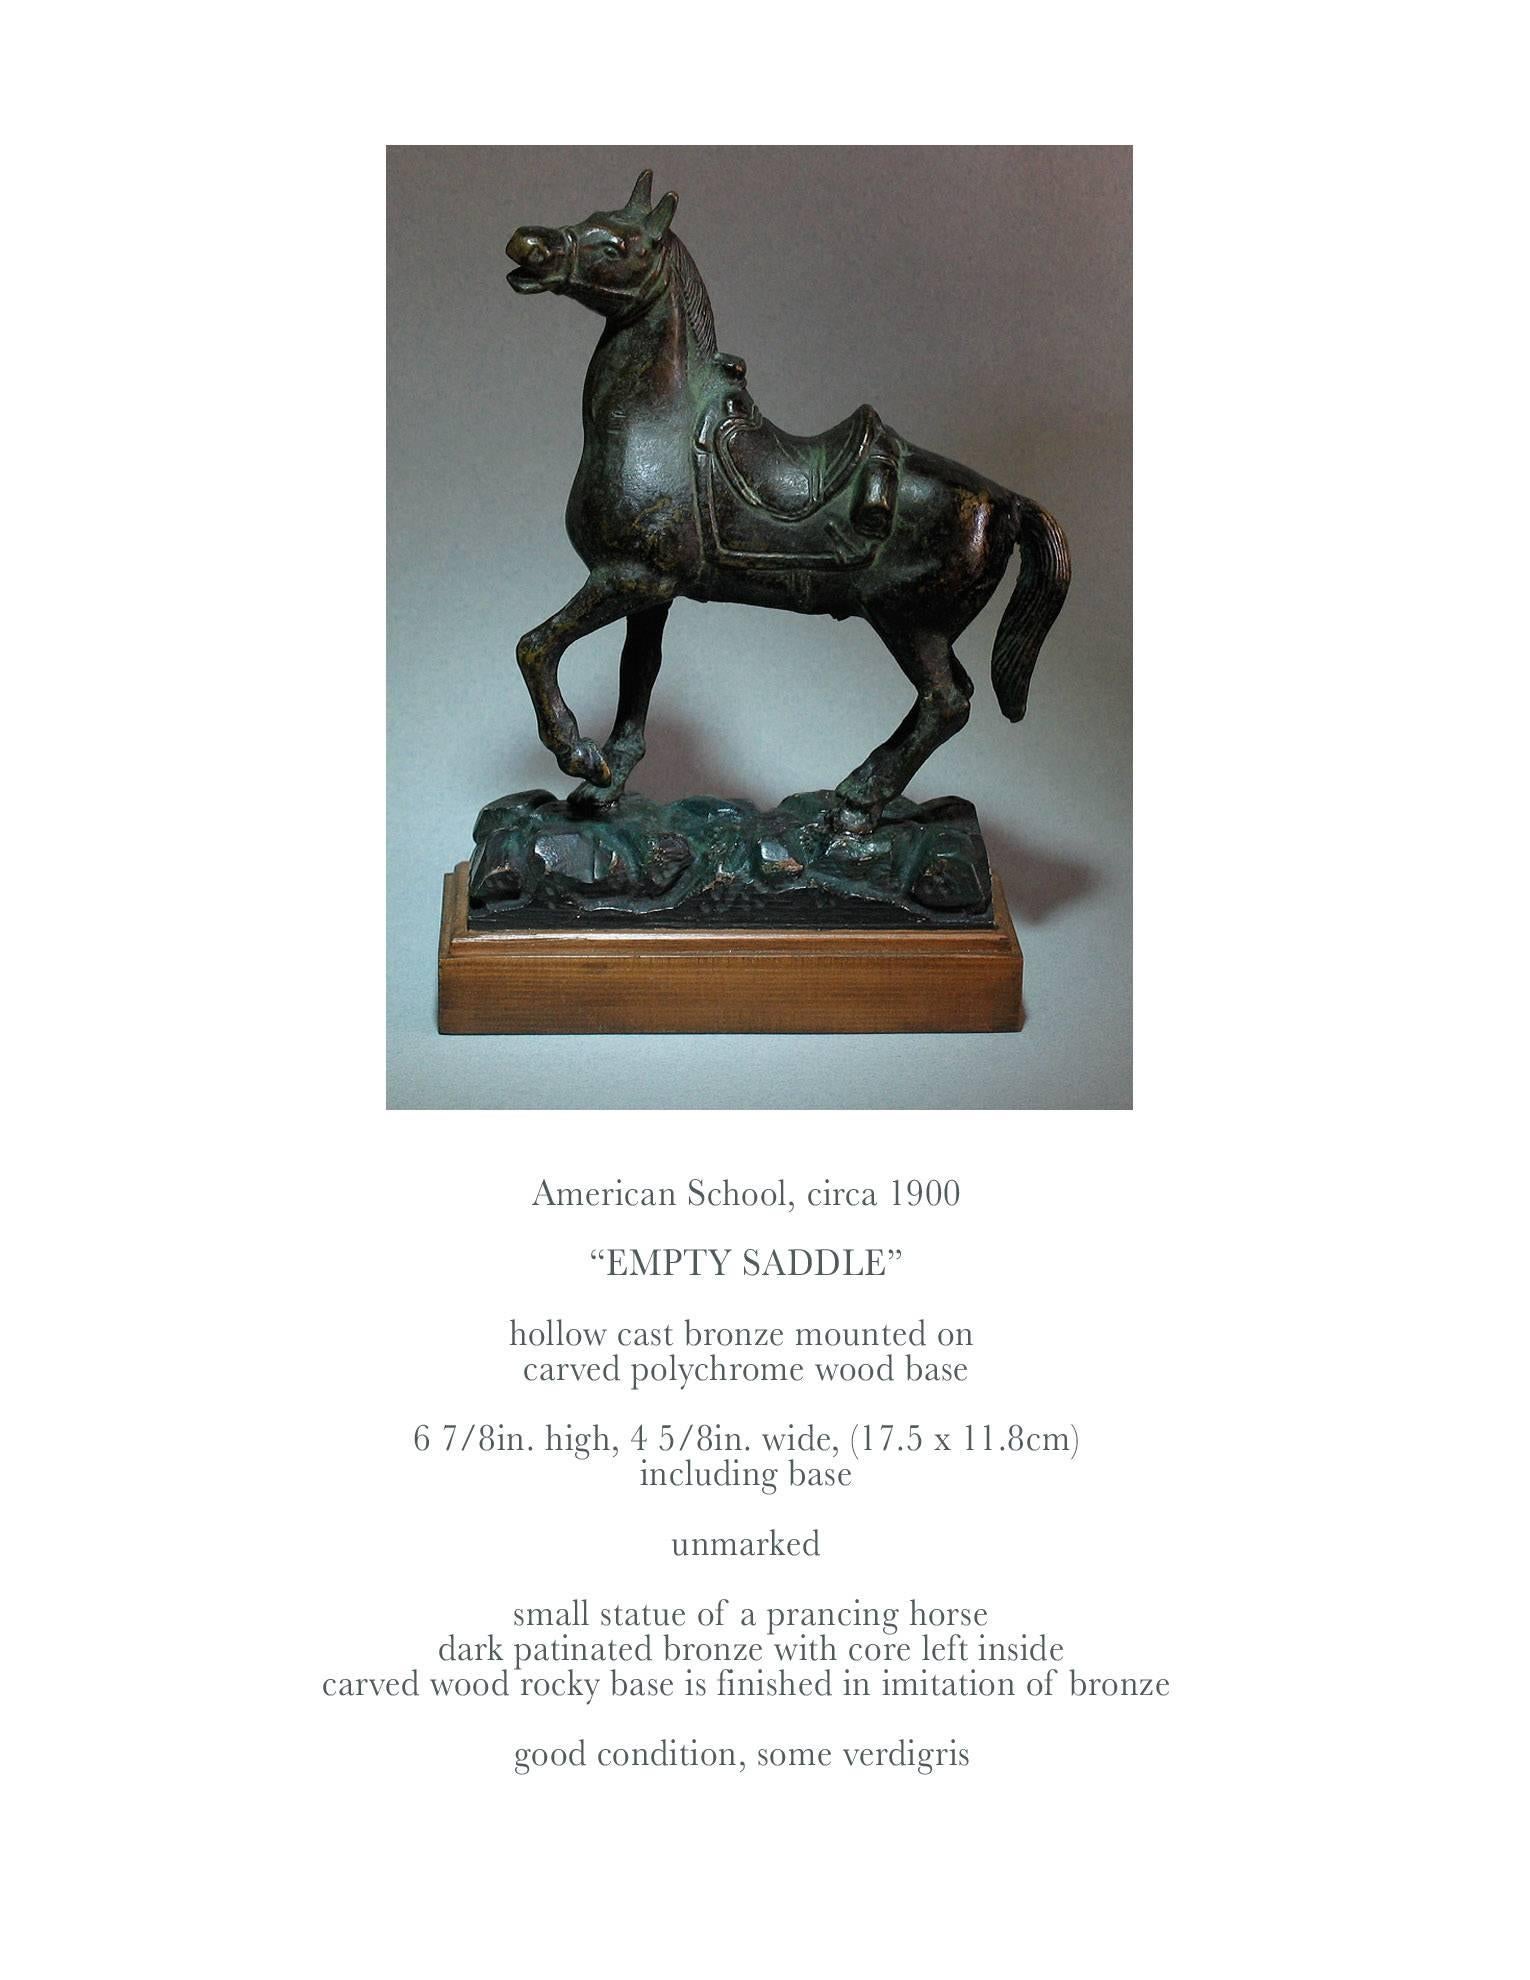 American school bronze prancing horse, titled 